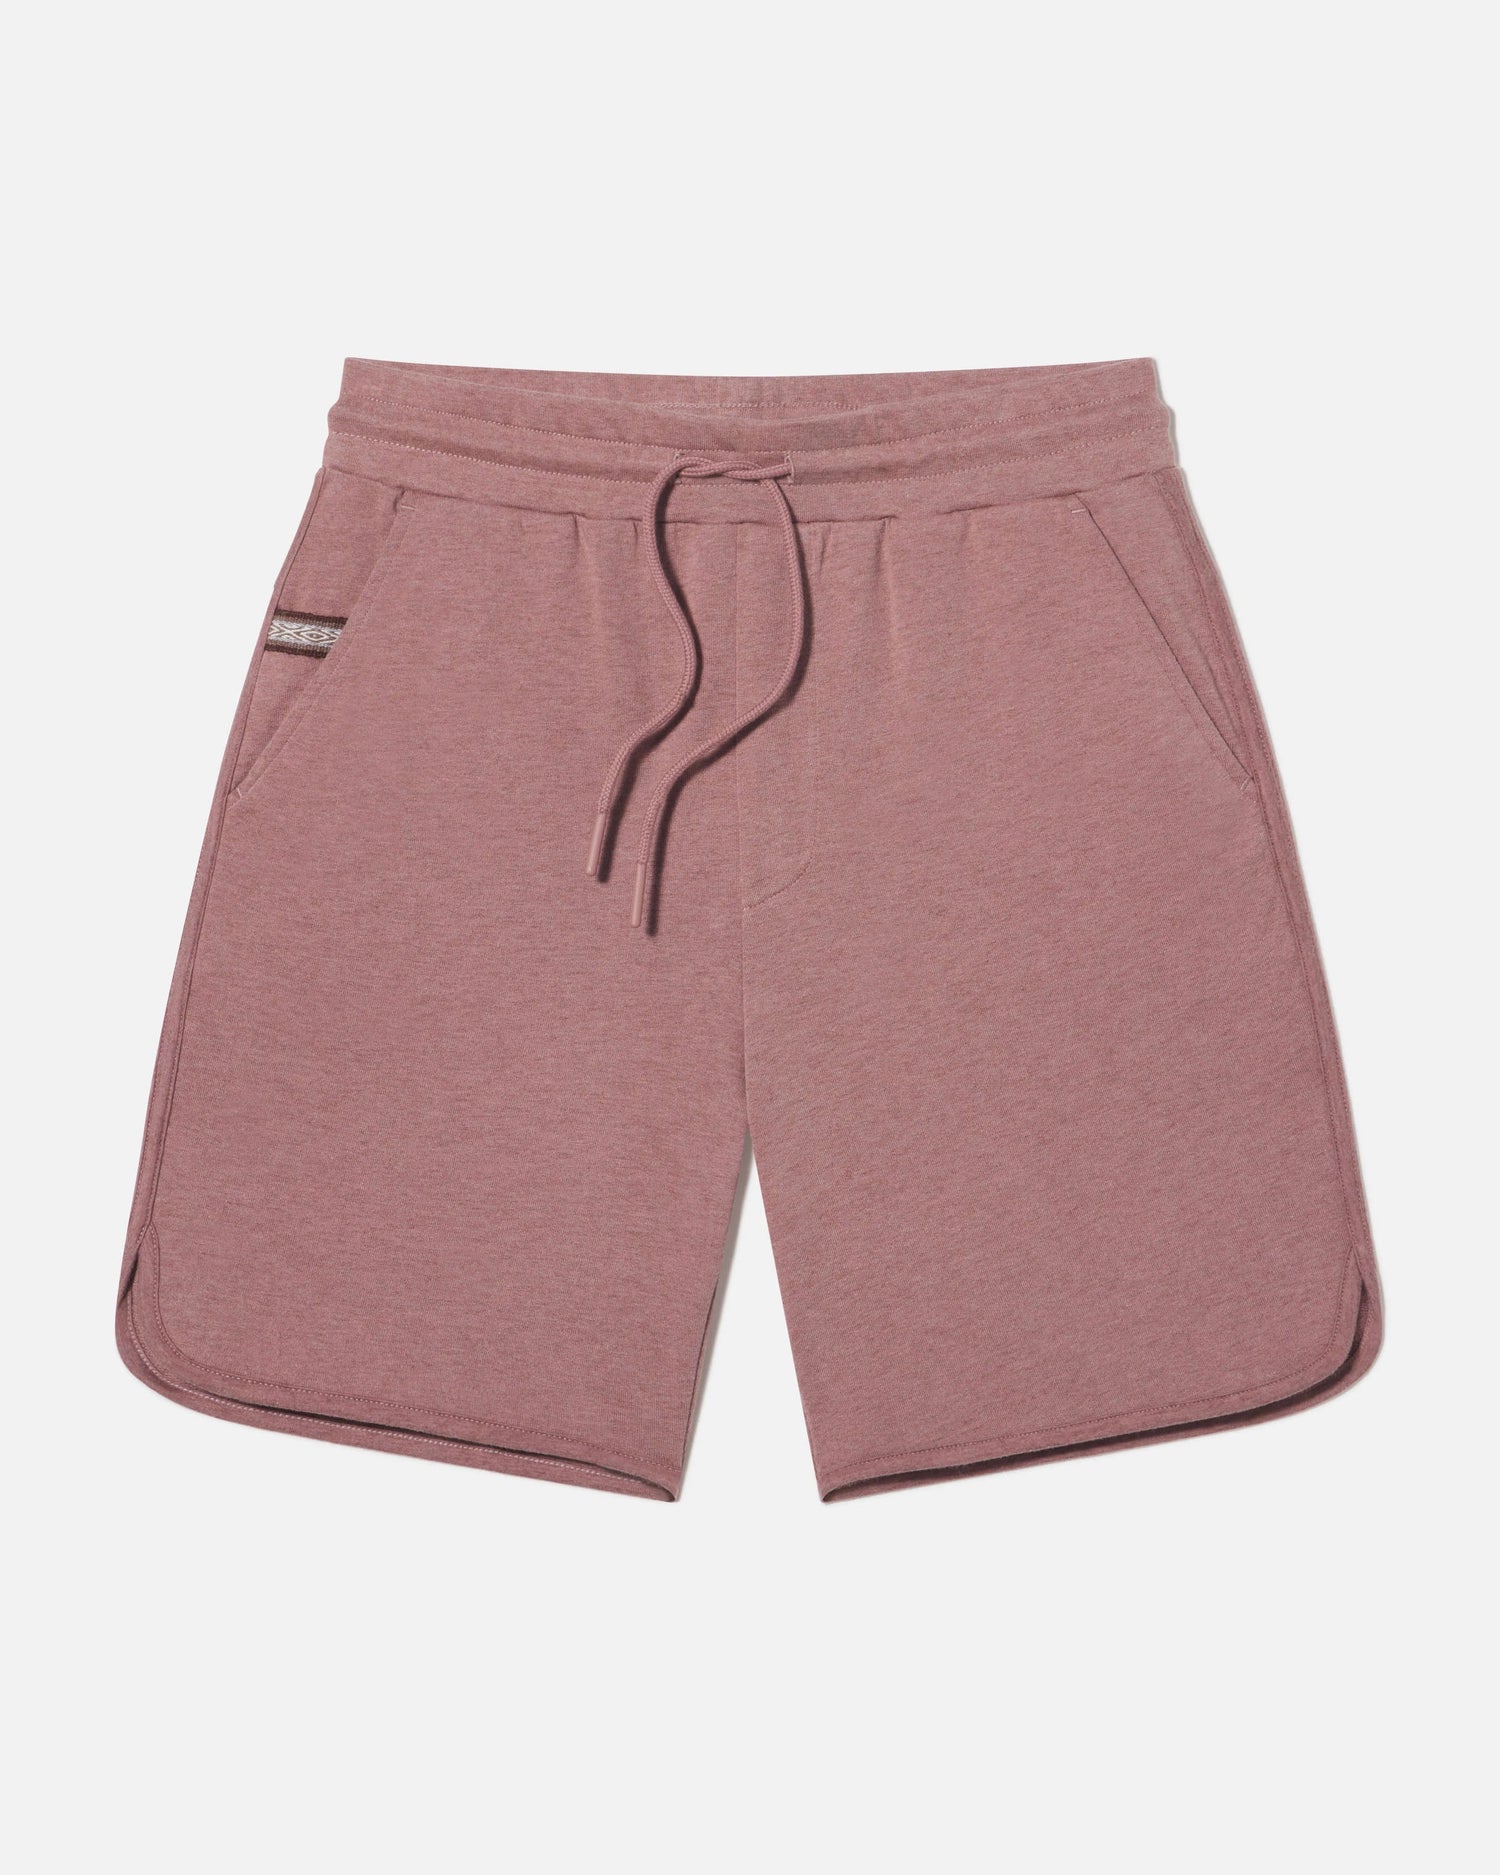 Men's Tri-Blend Shorts